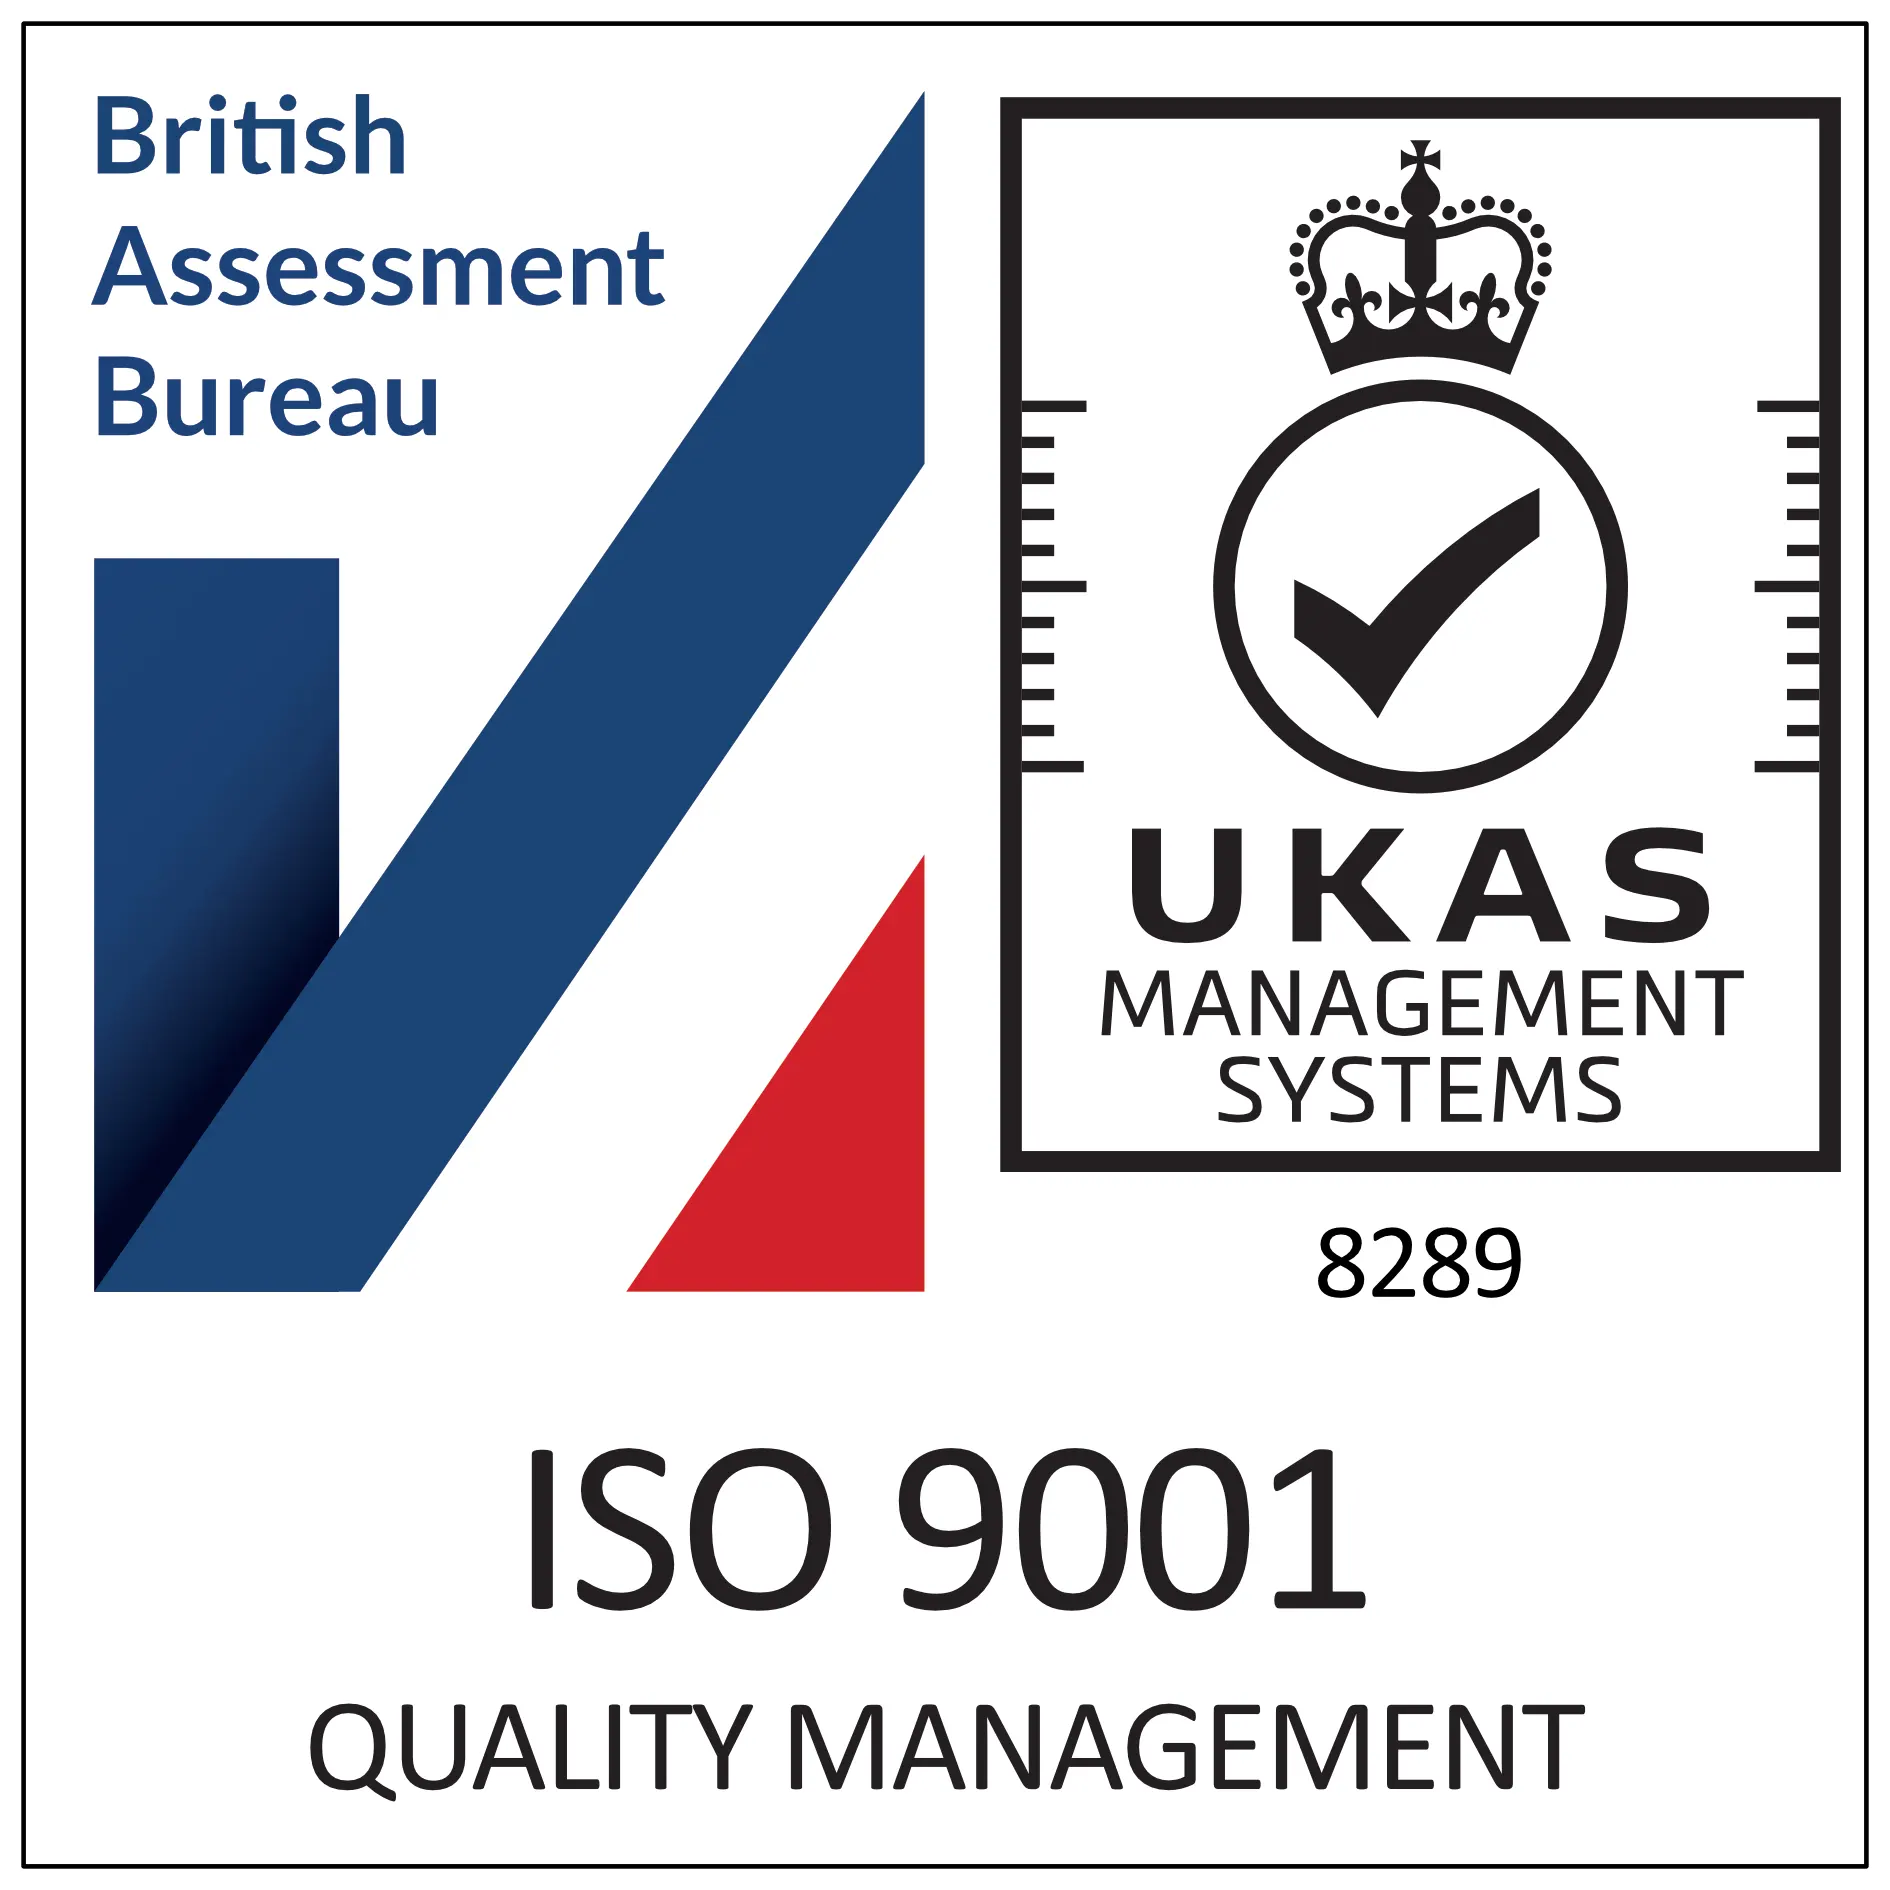 british assessment bureau iso 9001 quality management certificate